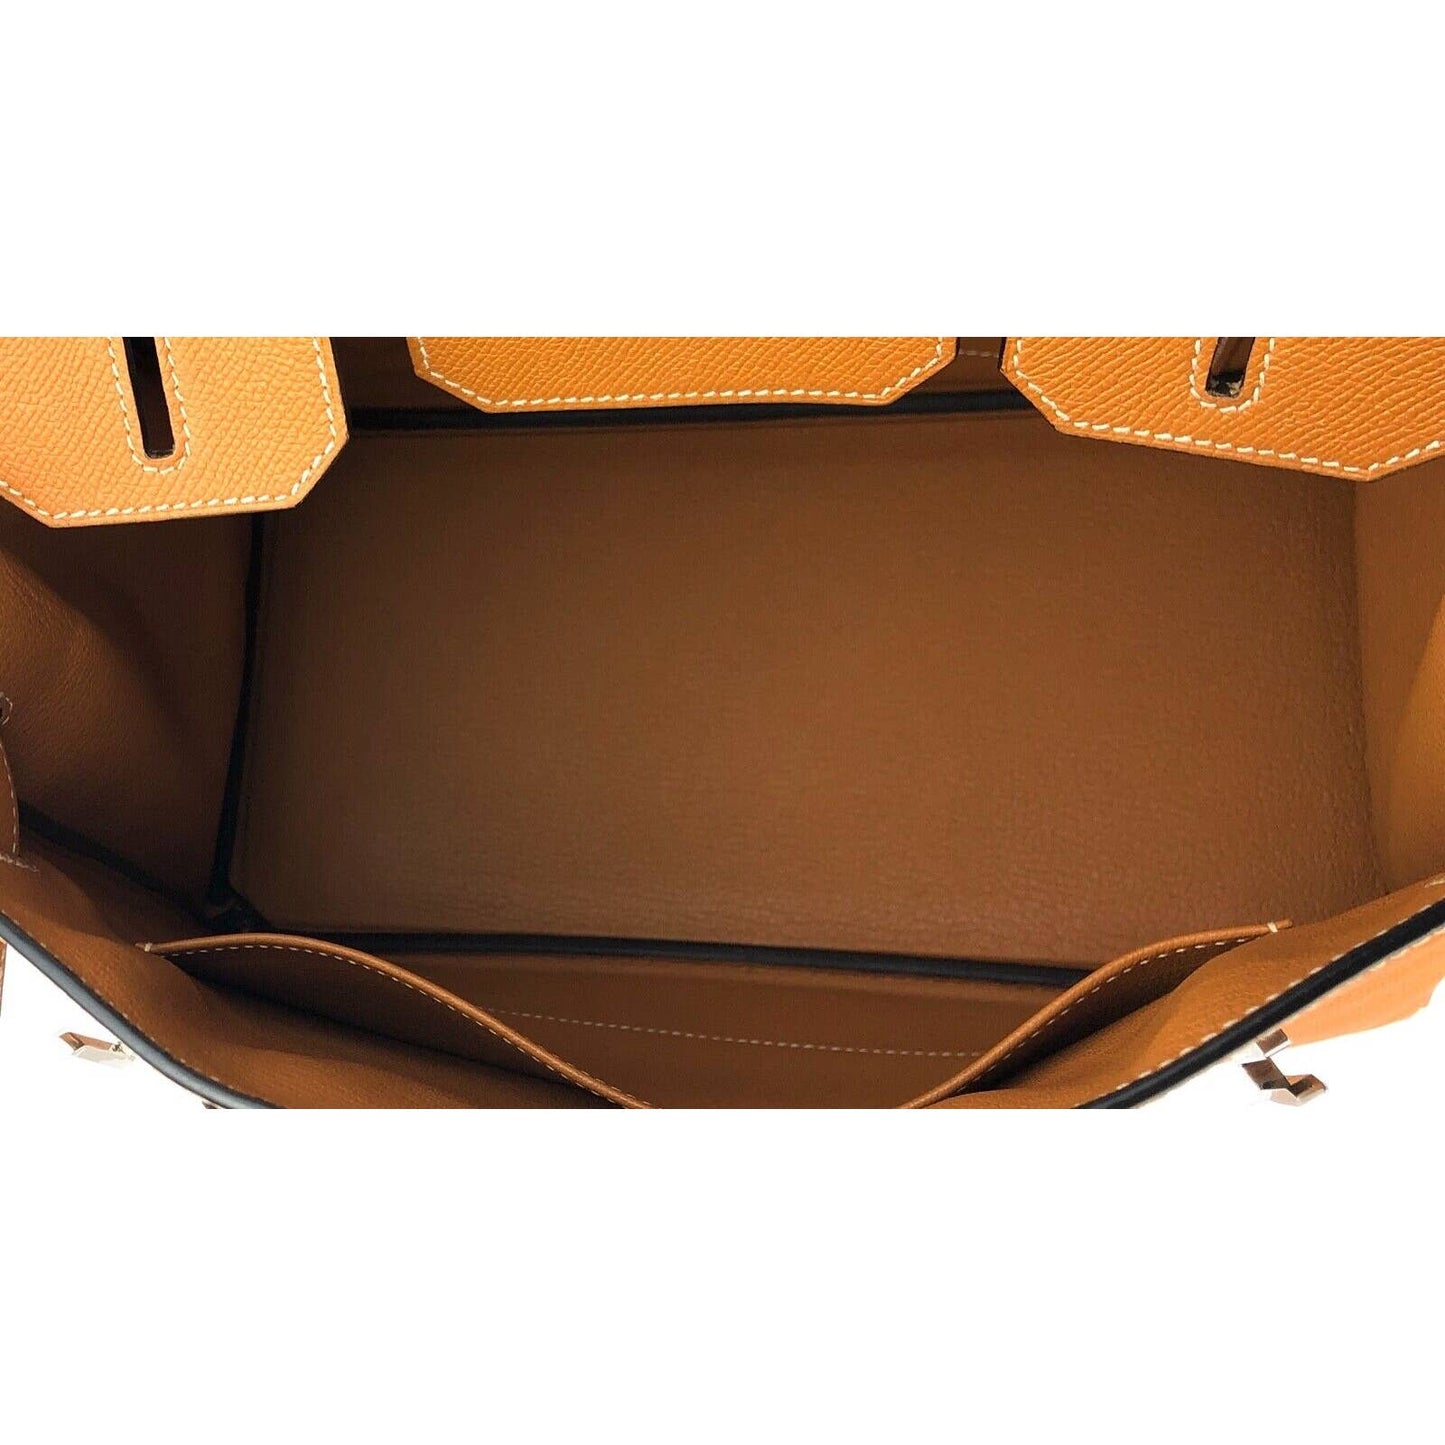 Hermes Birkin 30 Lime Yellow Epsom Leather Gold Hardware Bag Handbag – Lux  Addicts